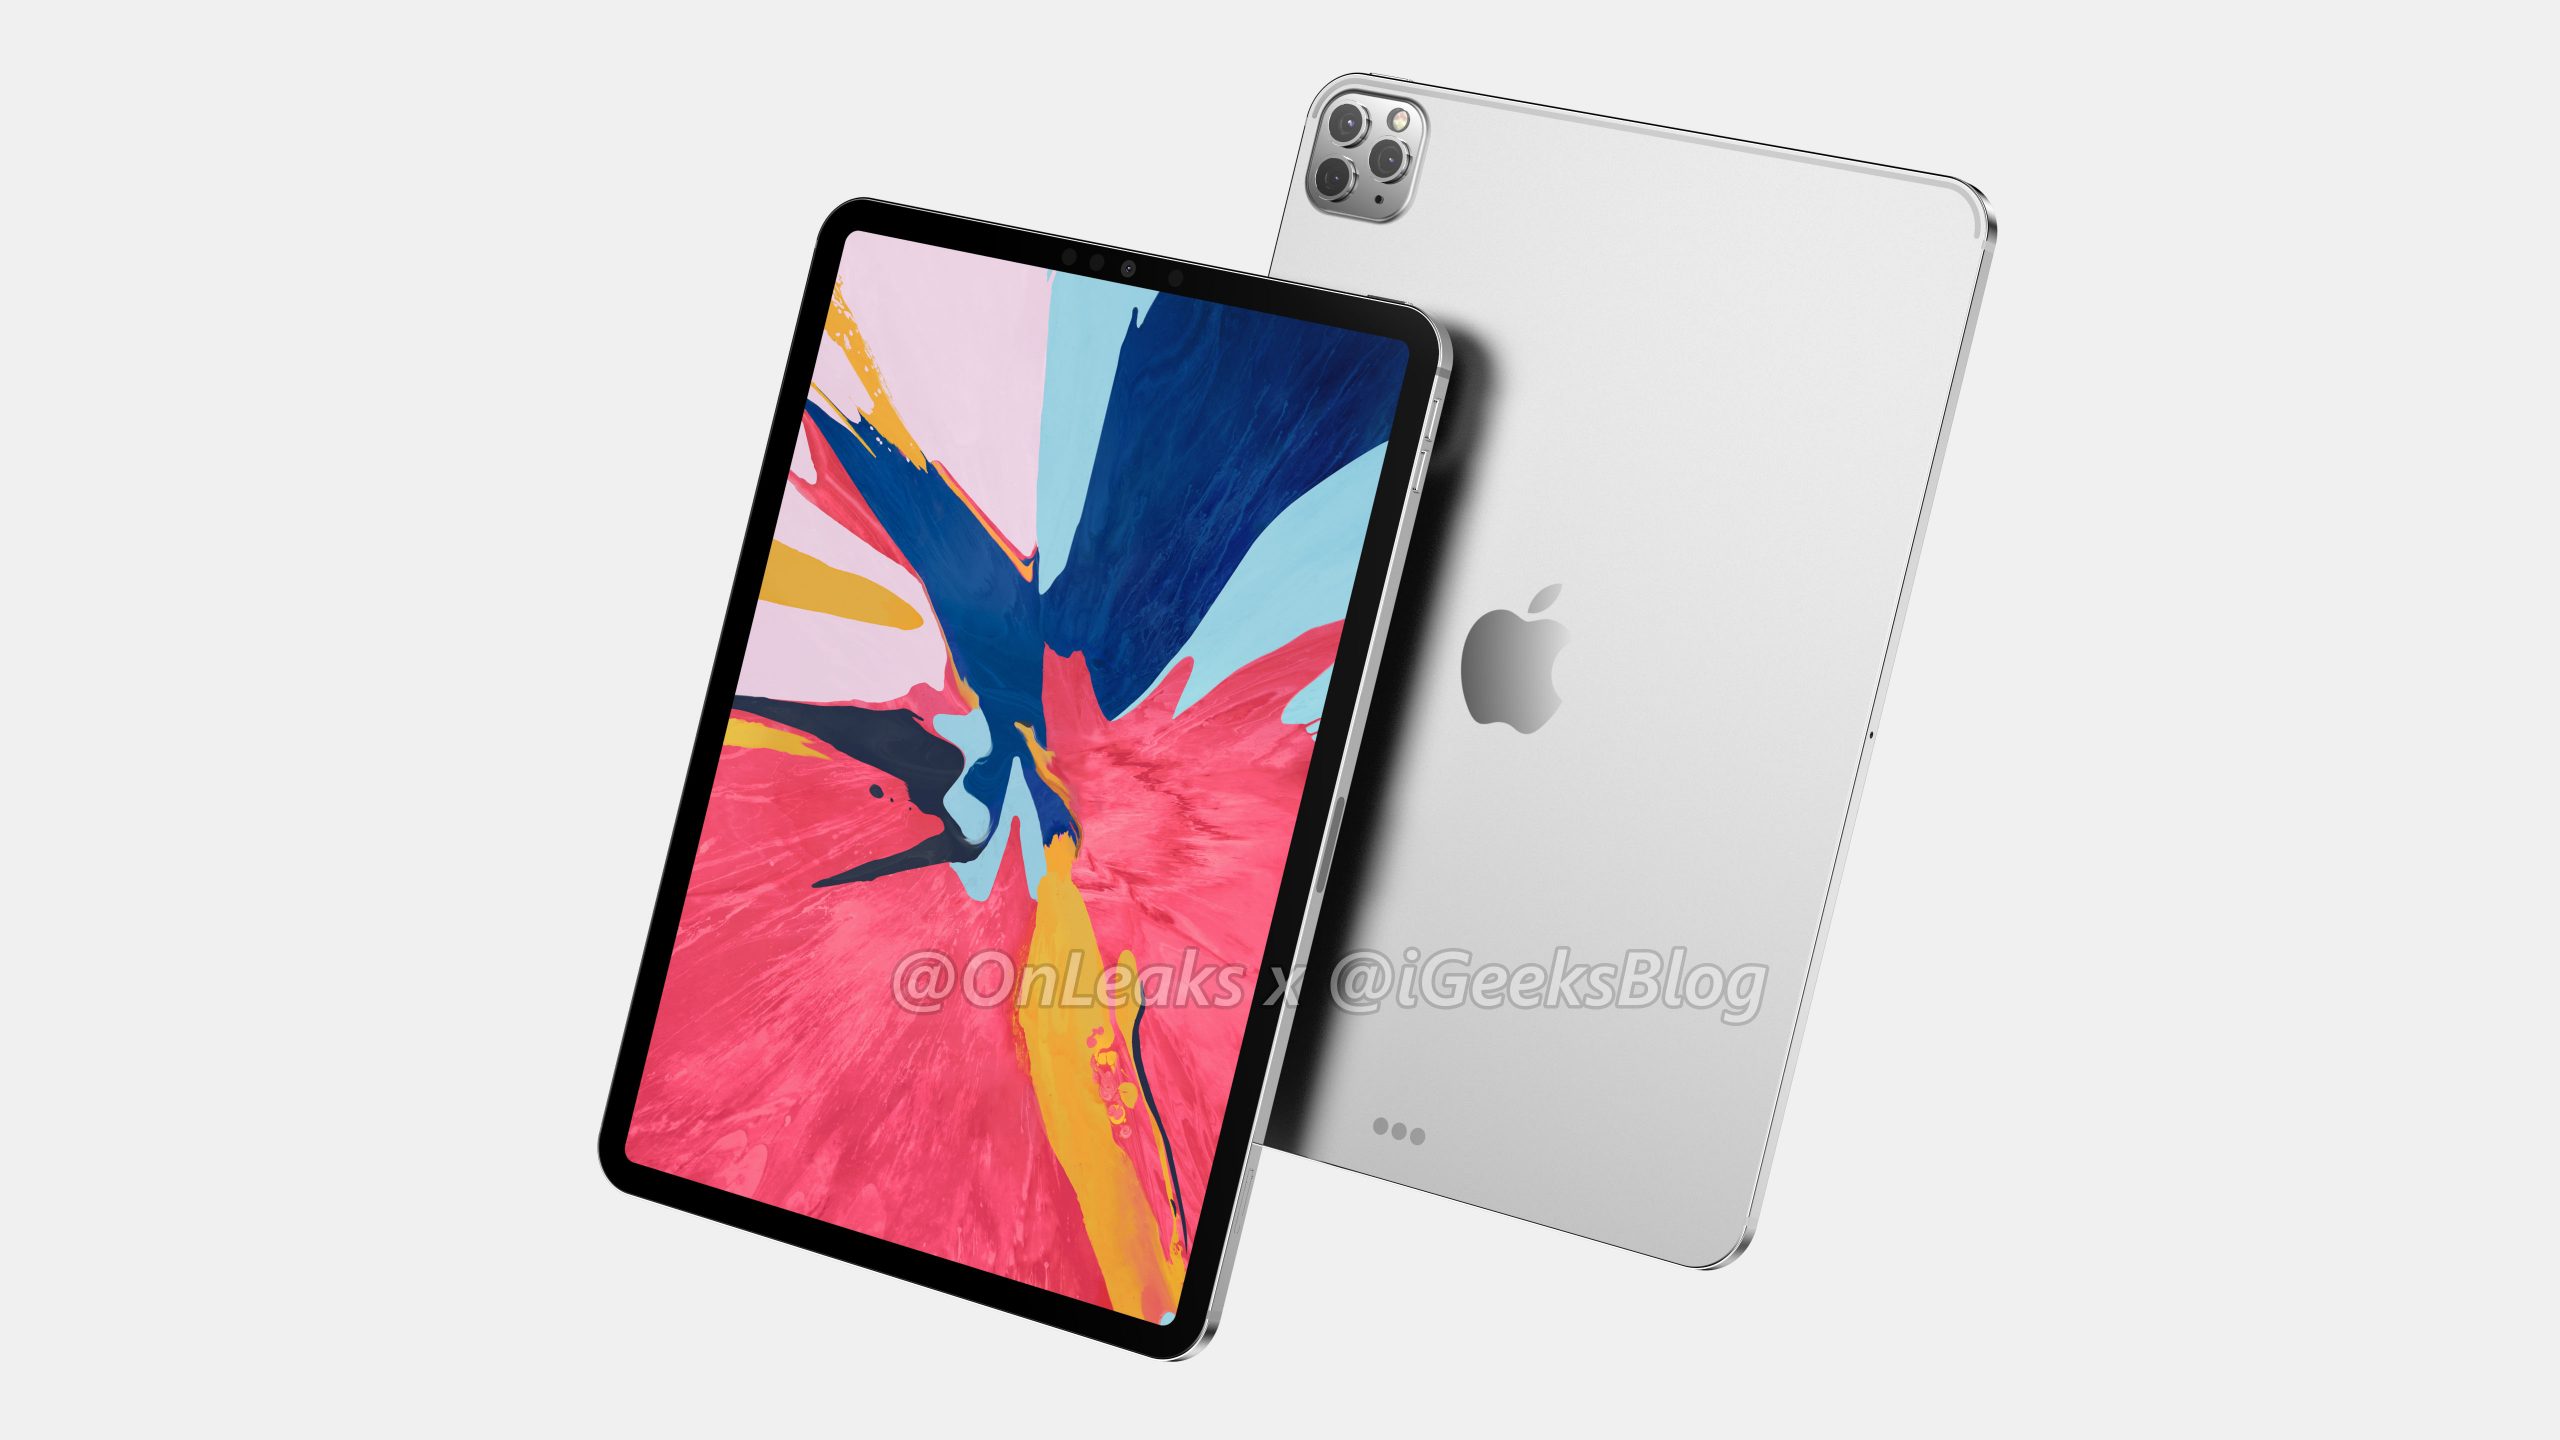 Hiển thị kết xuất mới 2020 iPad 11 inch